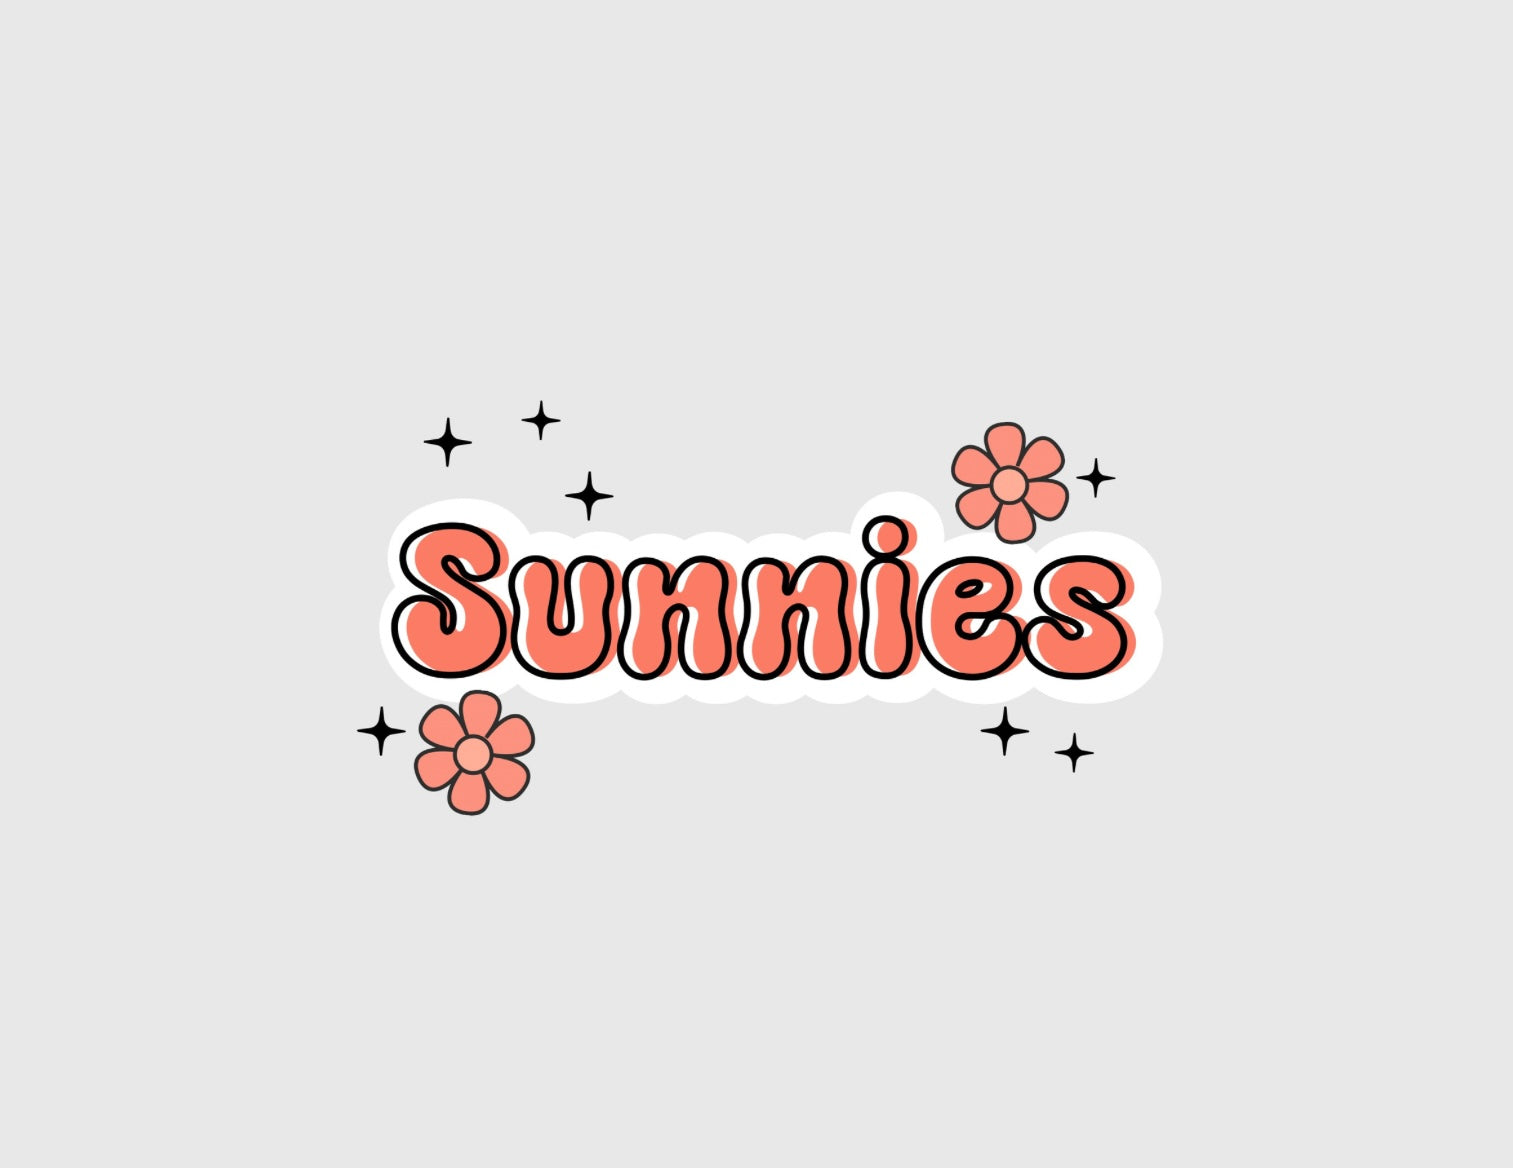 LV Fringe – Hunnies in Sunnies